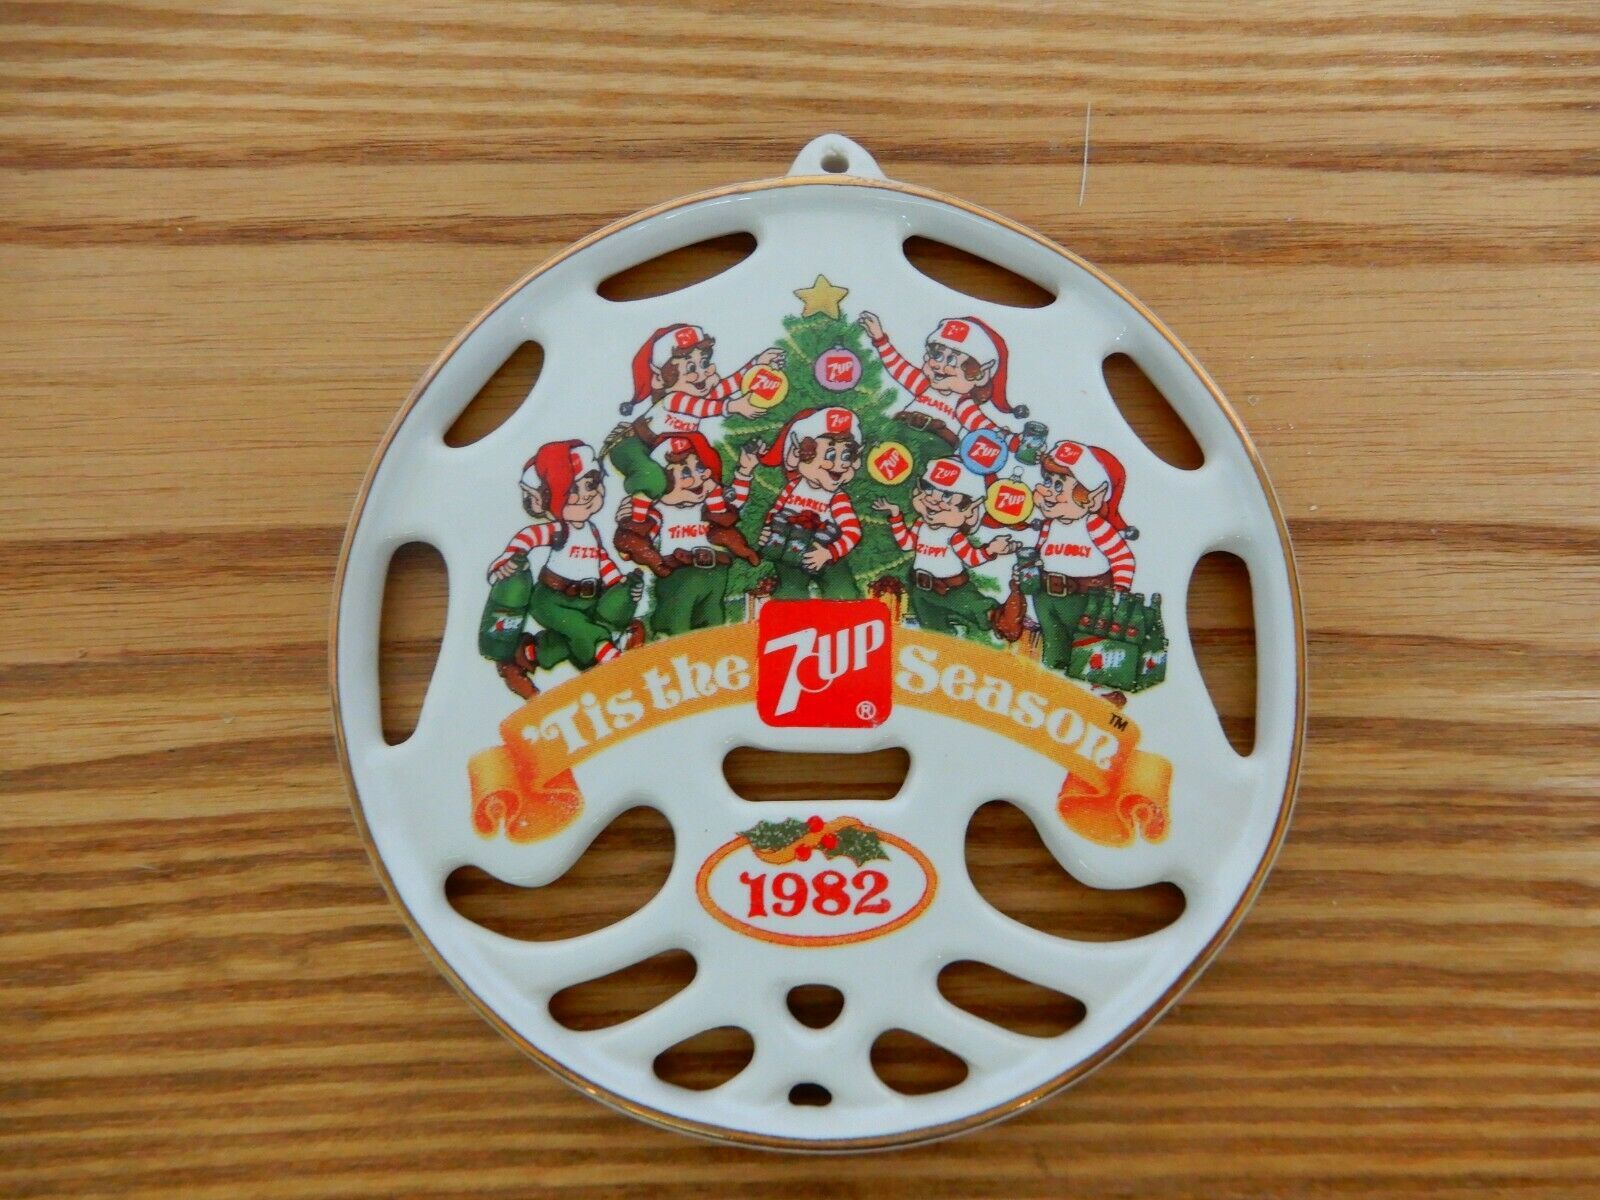 Vtg 1982 ceramic 7-Up "Tis The Season" Christmas holiday ornament - $15.00